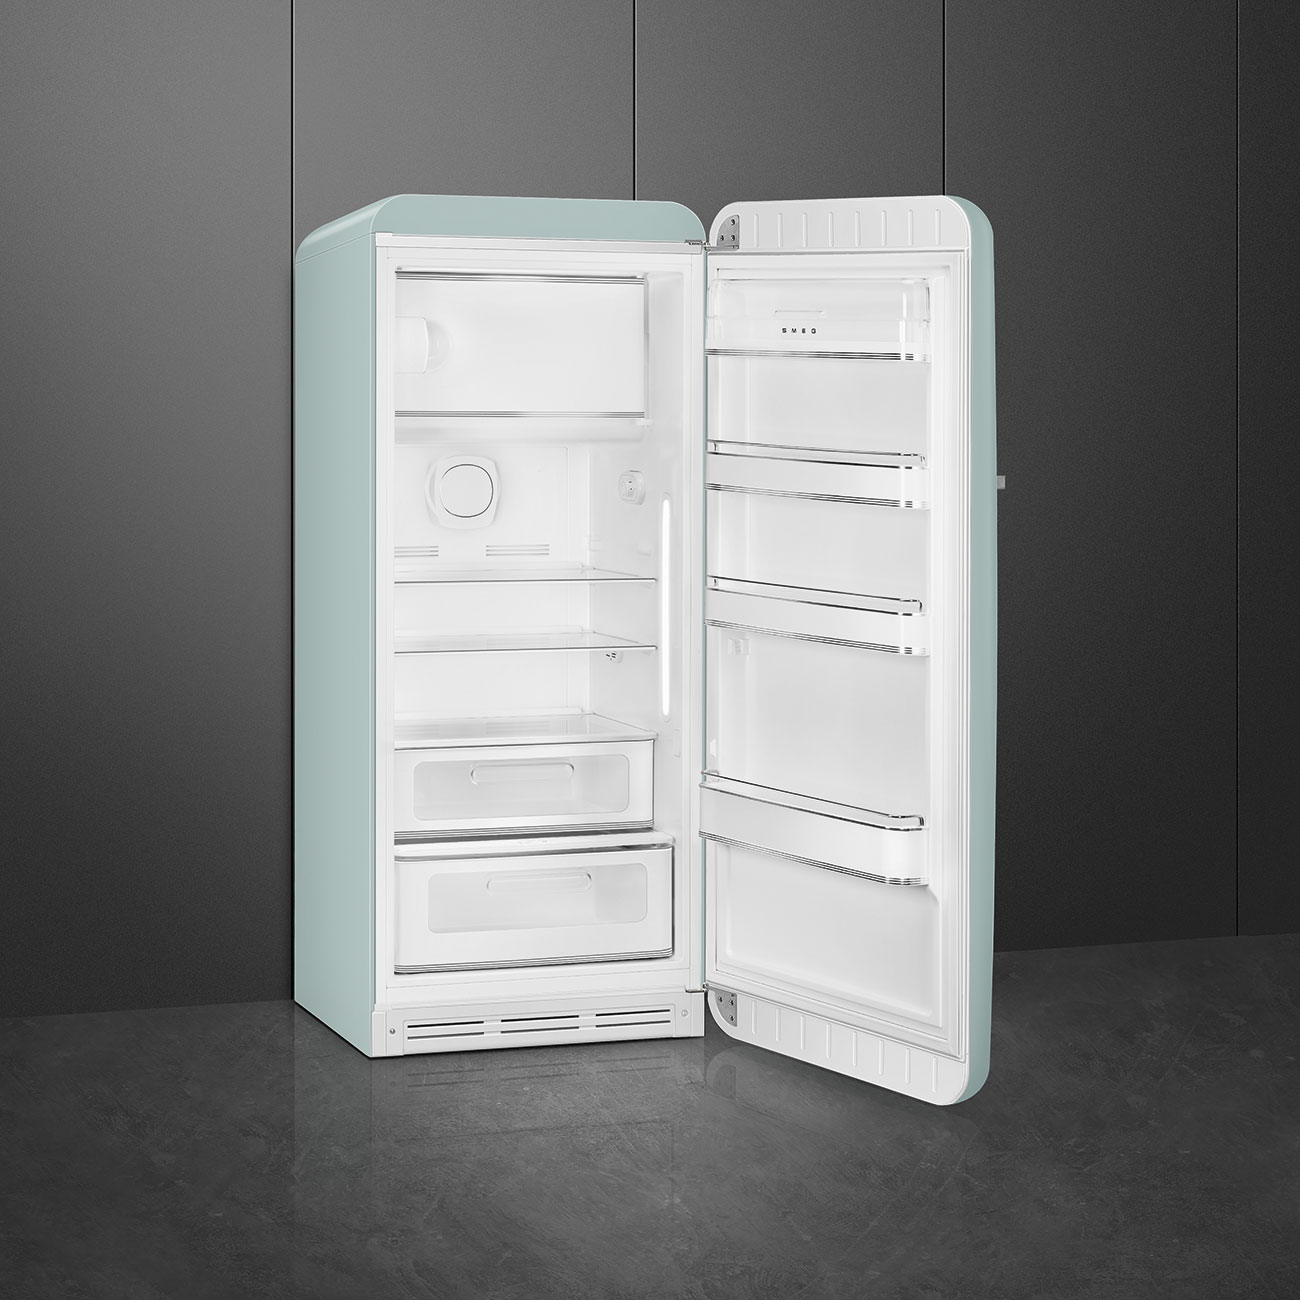 Sea Salt Green refrigerator - Smeg_2